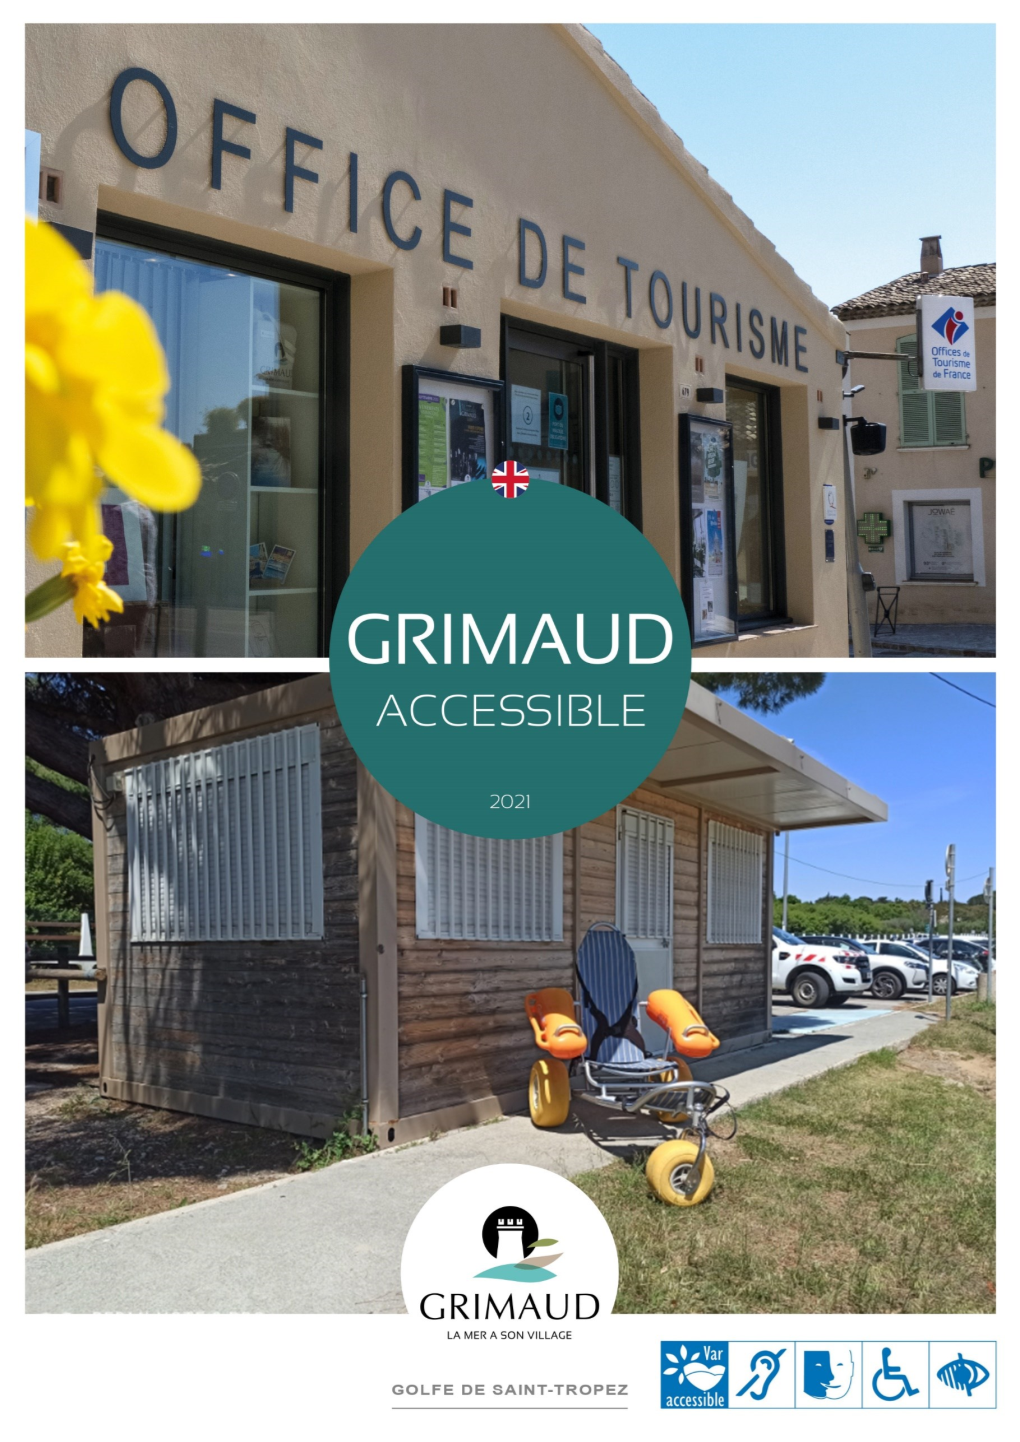 Port Grimaud Tourist Office